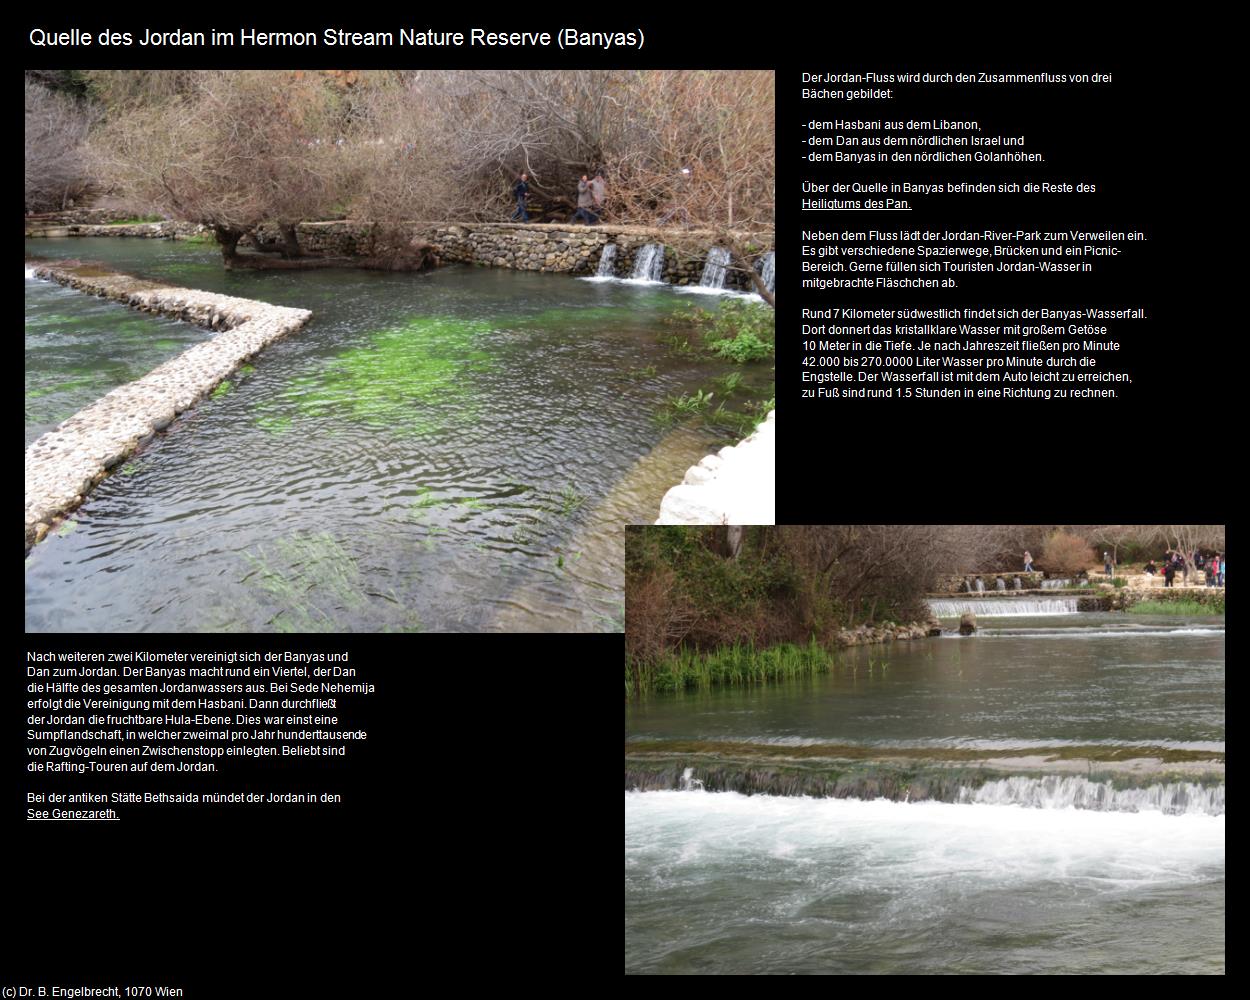 Quelle des Jordan im Hermon Stream Nature Reserve (Banyas) in Kulturatlas-ISRAEL(c)B.Engelbrecht